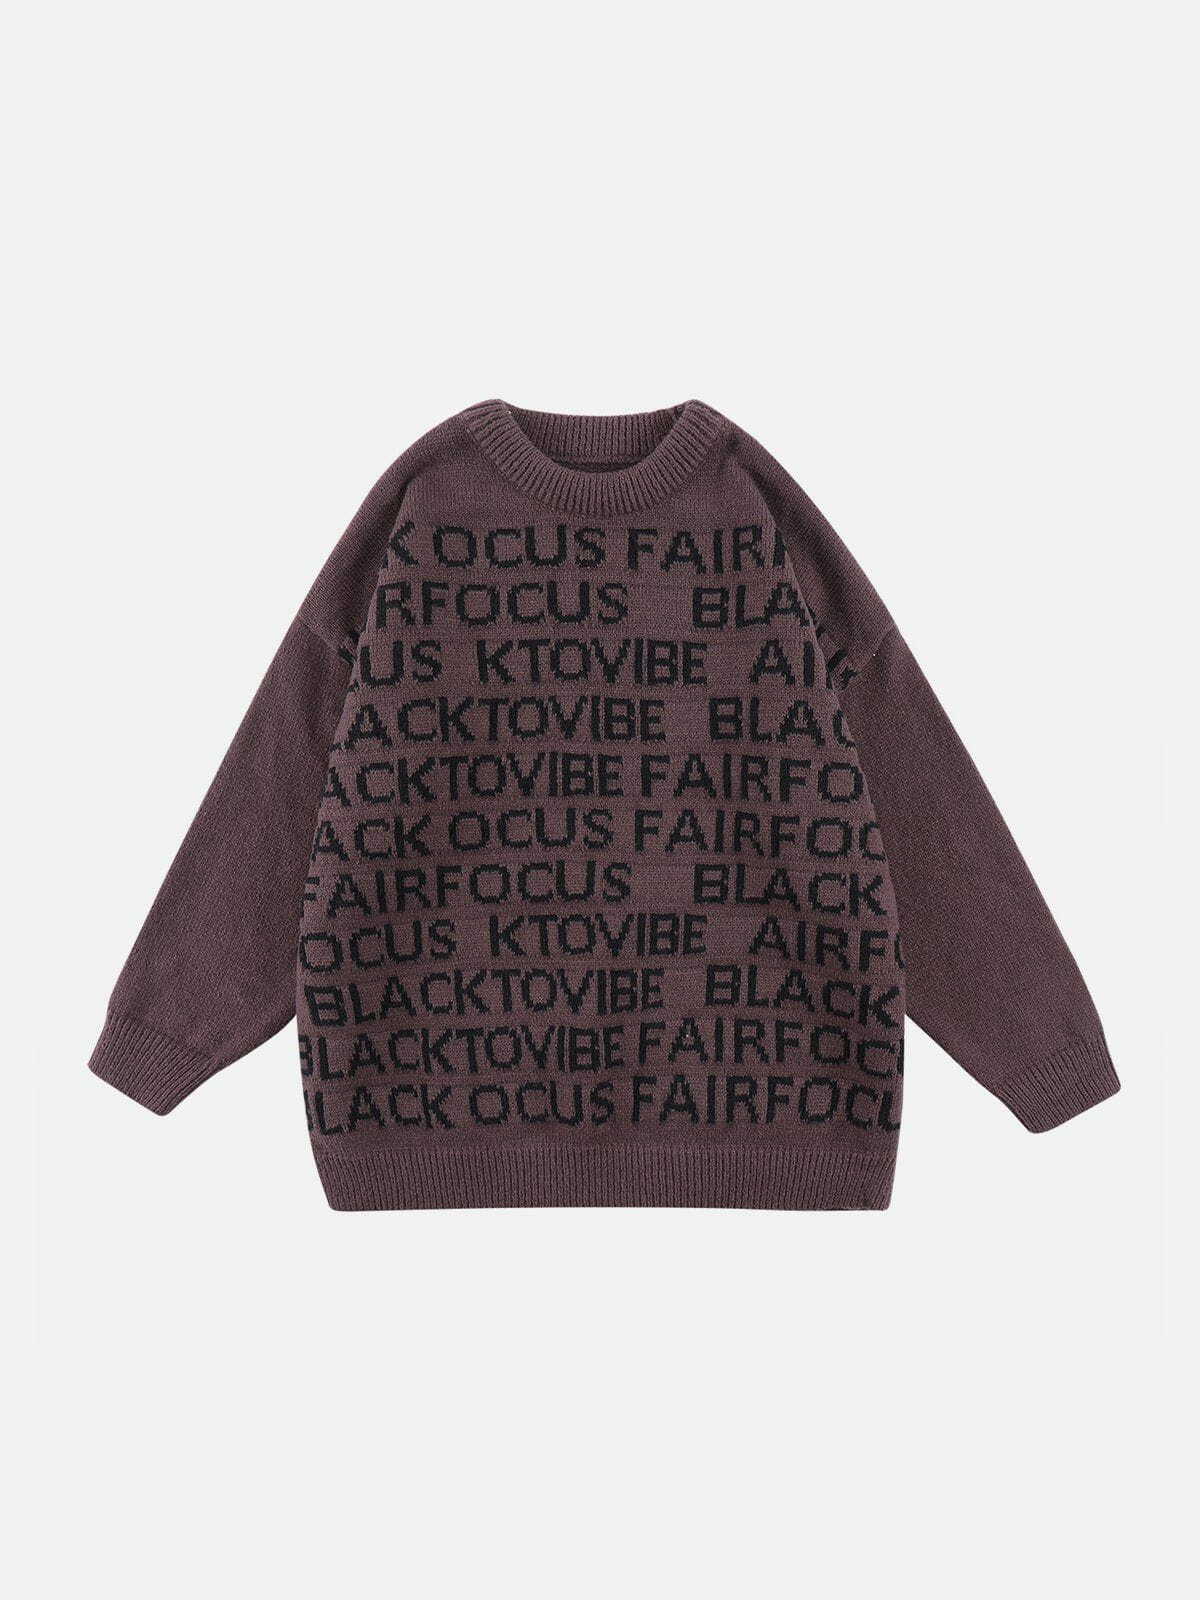 retro alphabet sweater edgy & vibrant streetwear 8467